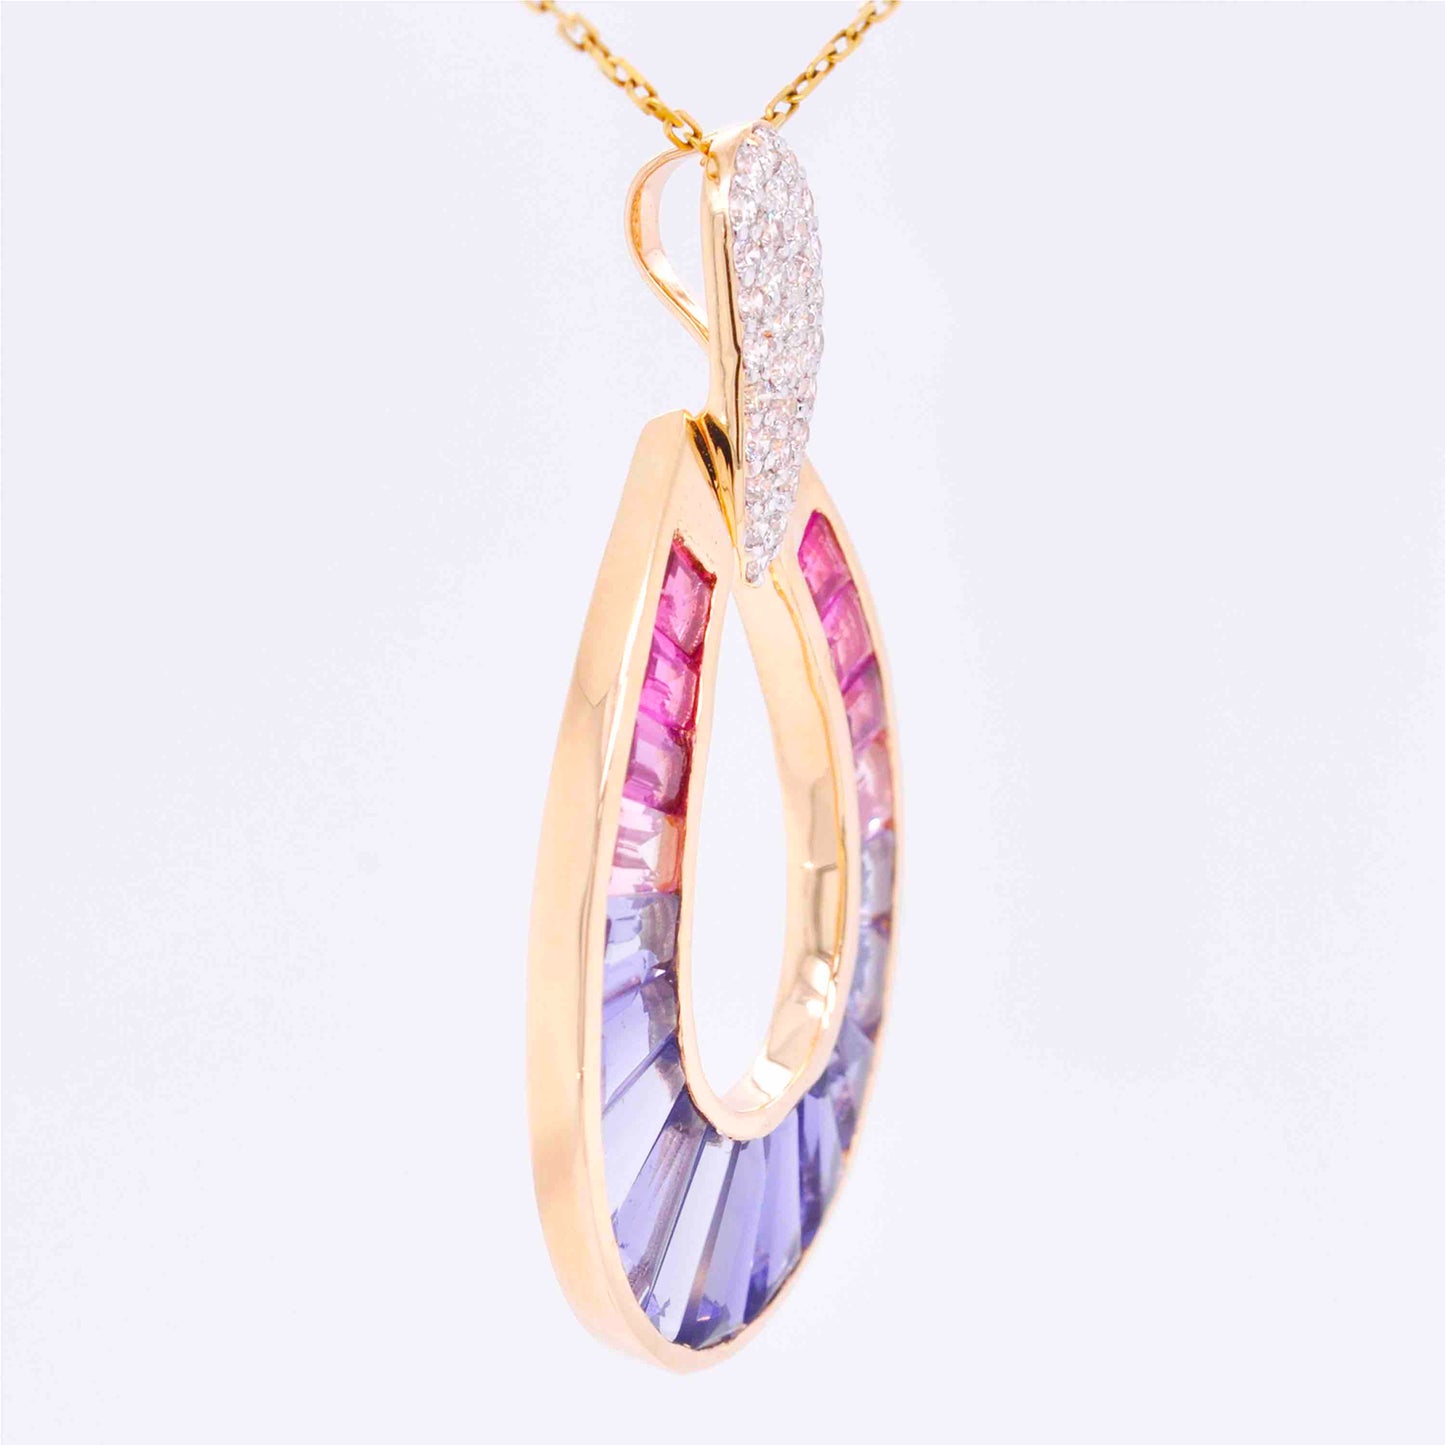 raindrop gemstone necklace with diamonds